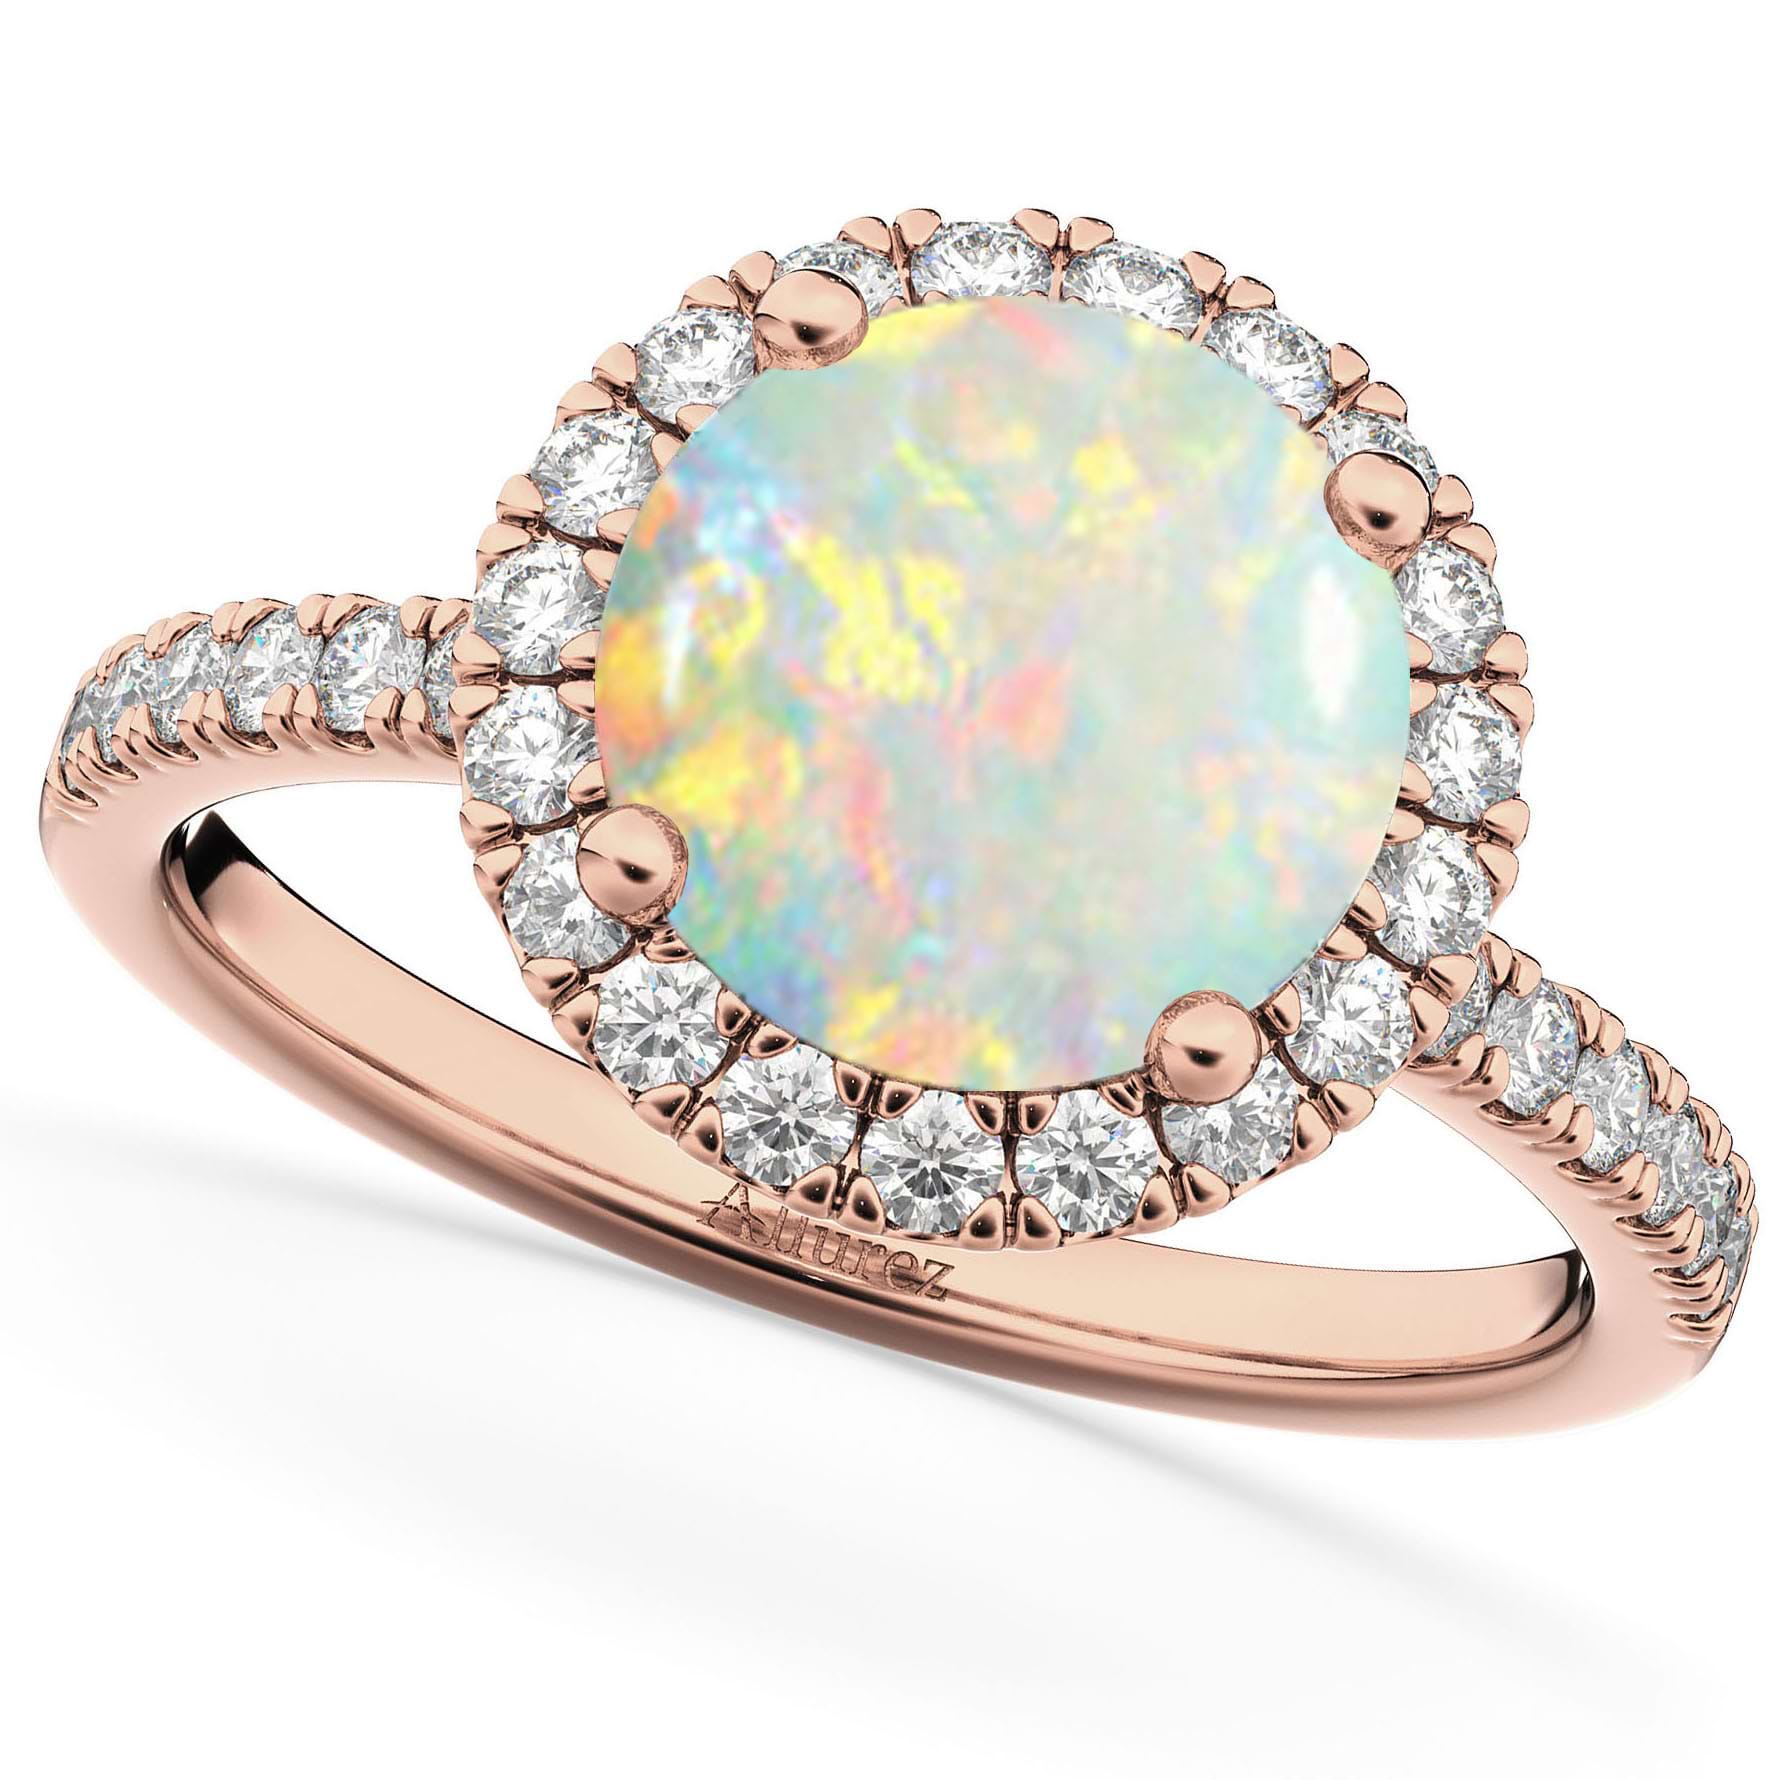 Halo Opal & Diamond Engagement Ring 14K Rose Gold 1.80ct